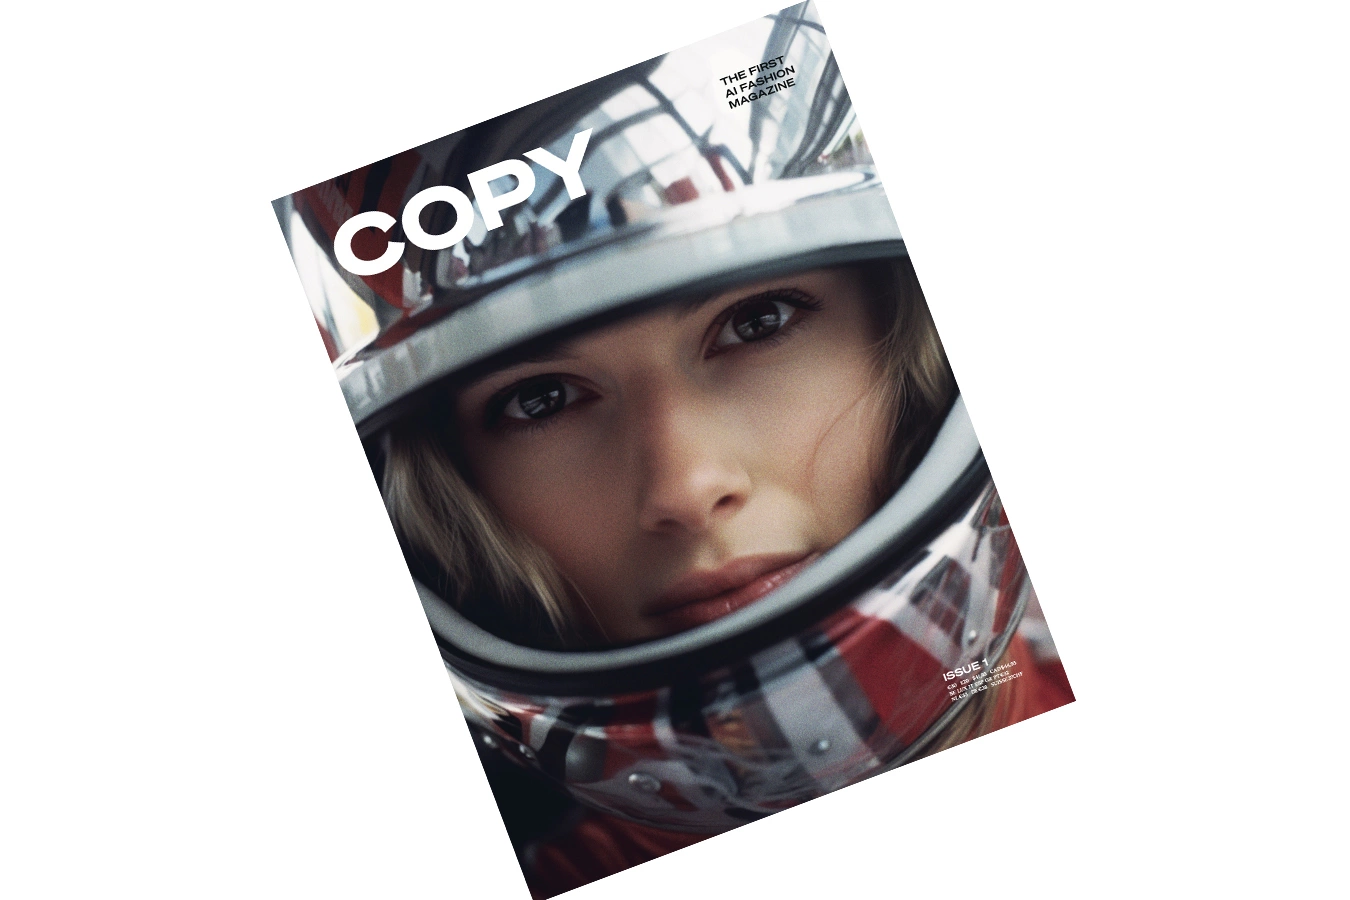 Copy Magazine